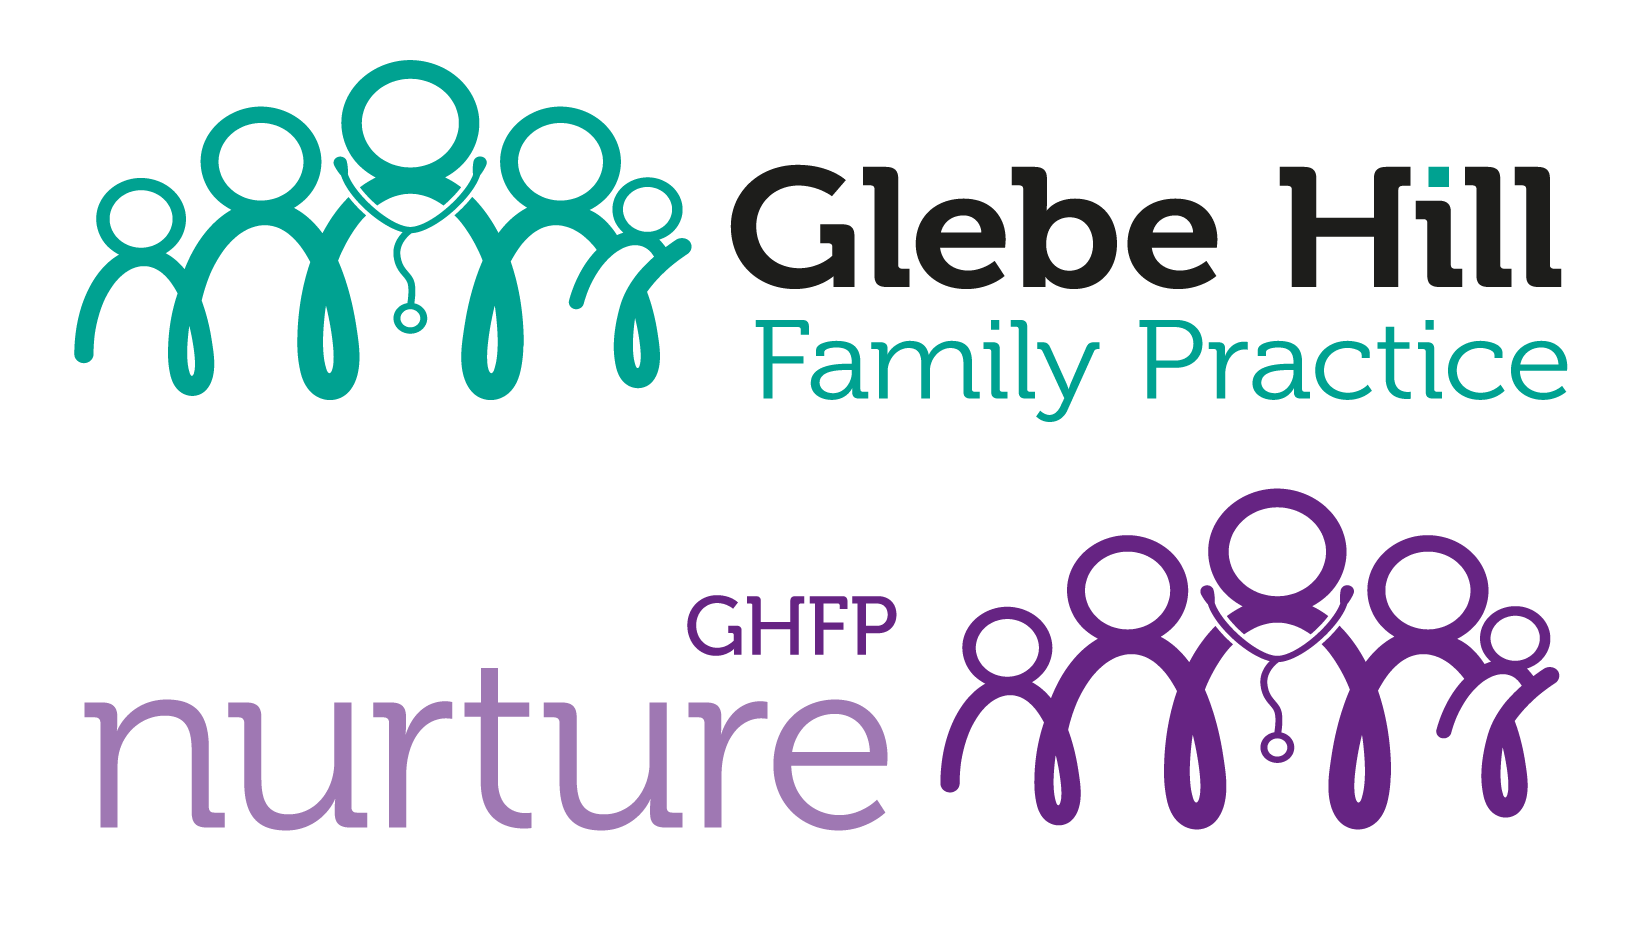 Glebe Hill Family Practice & GHFP Nurture